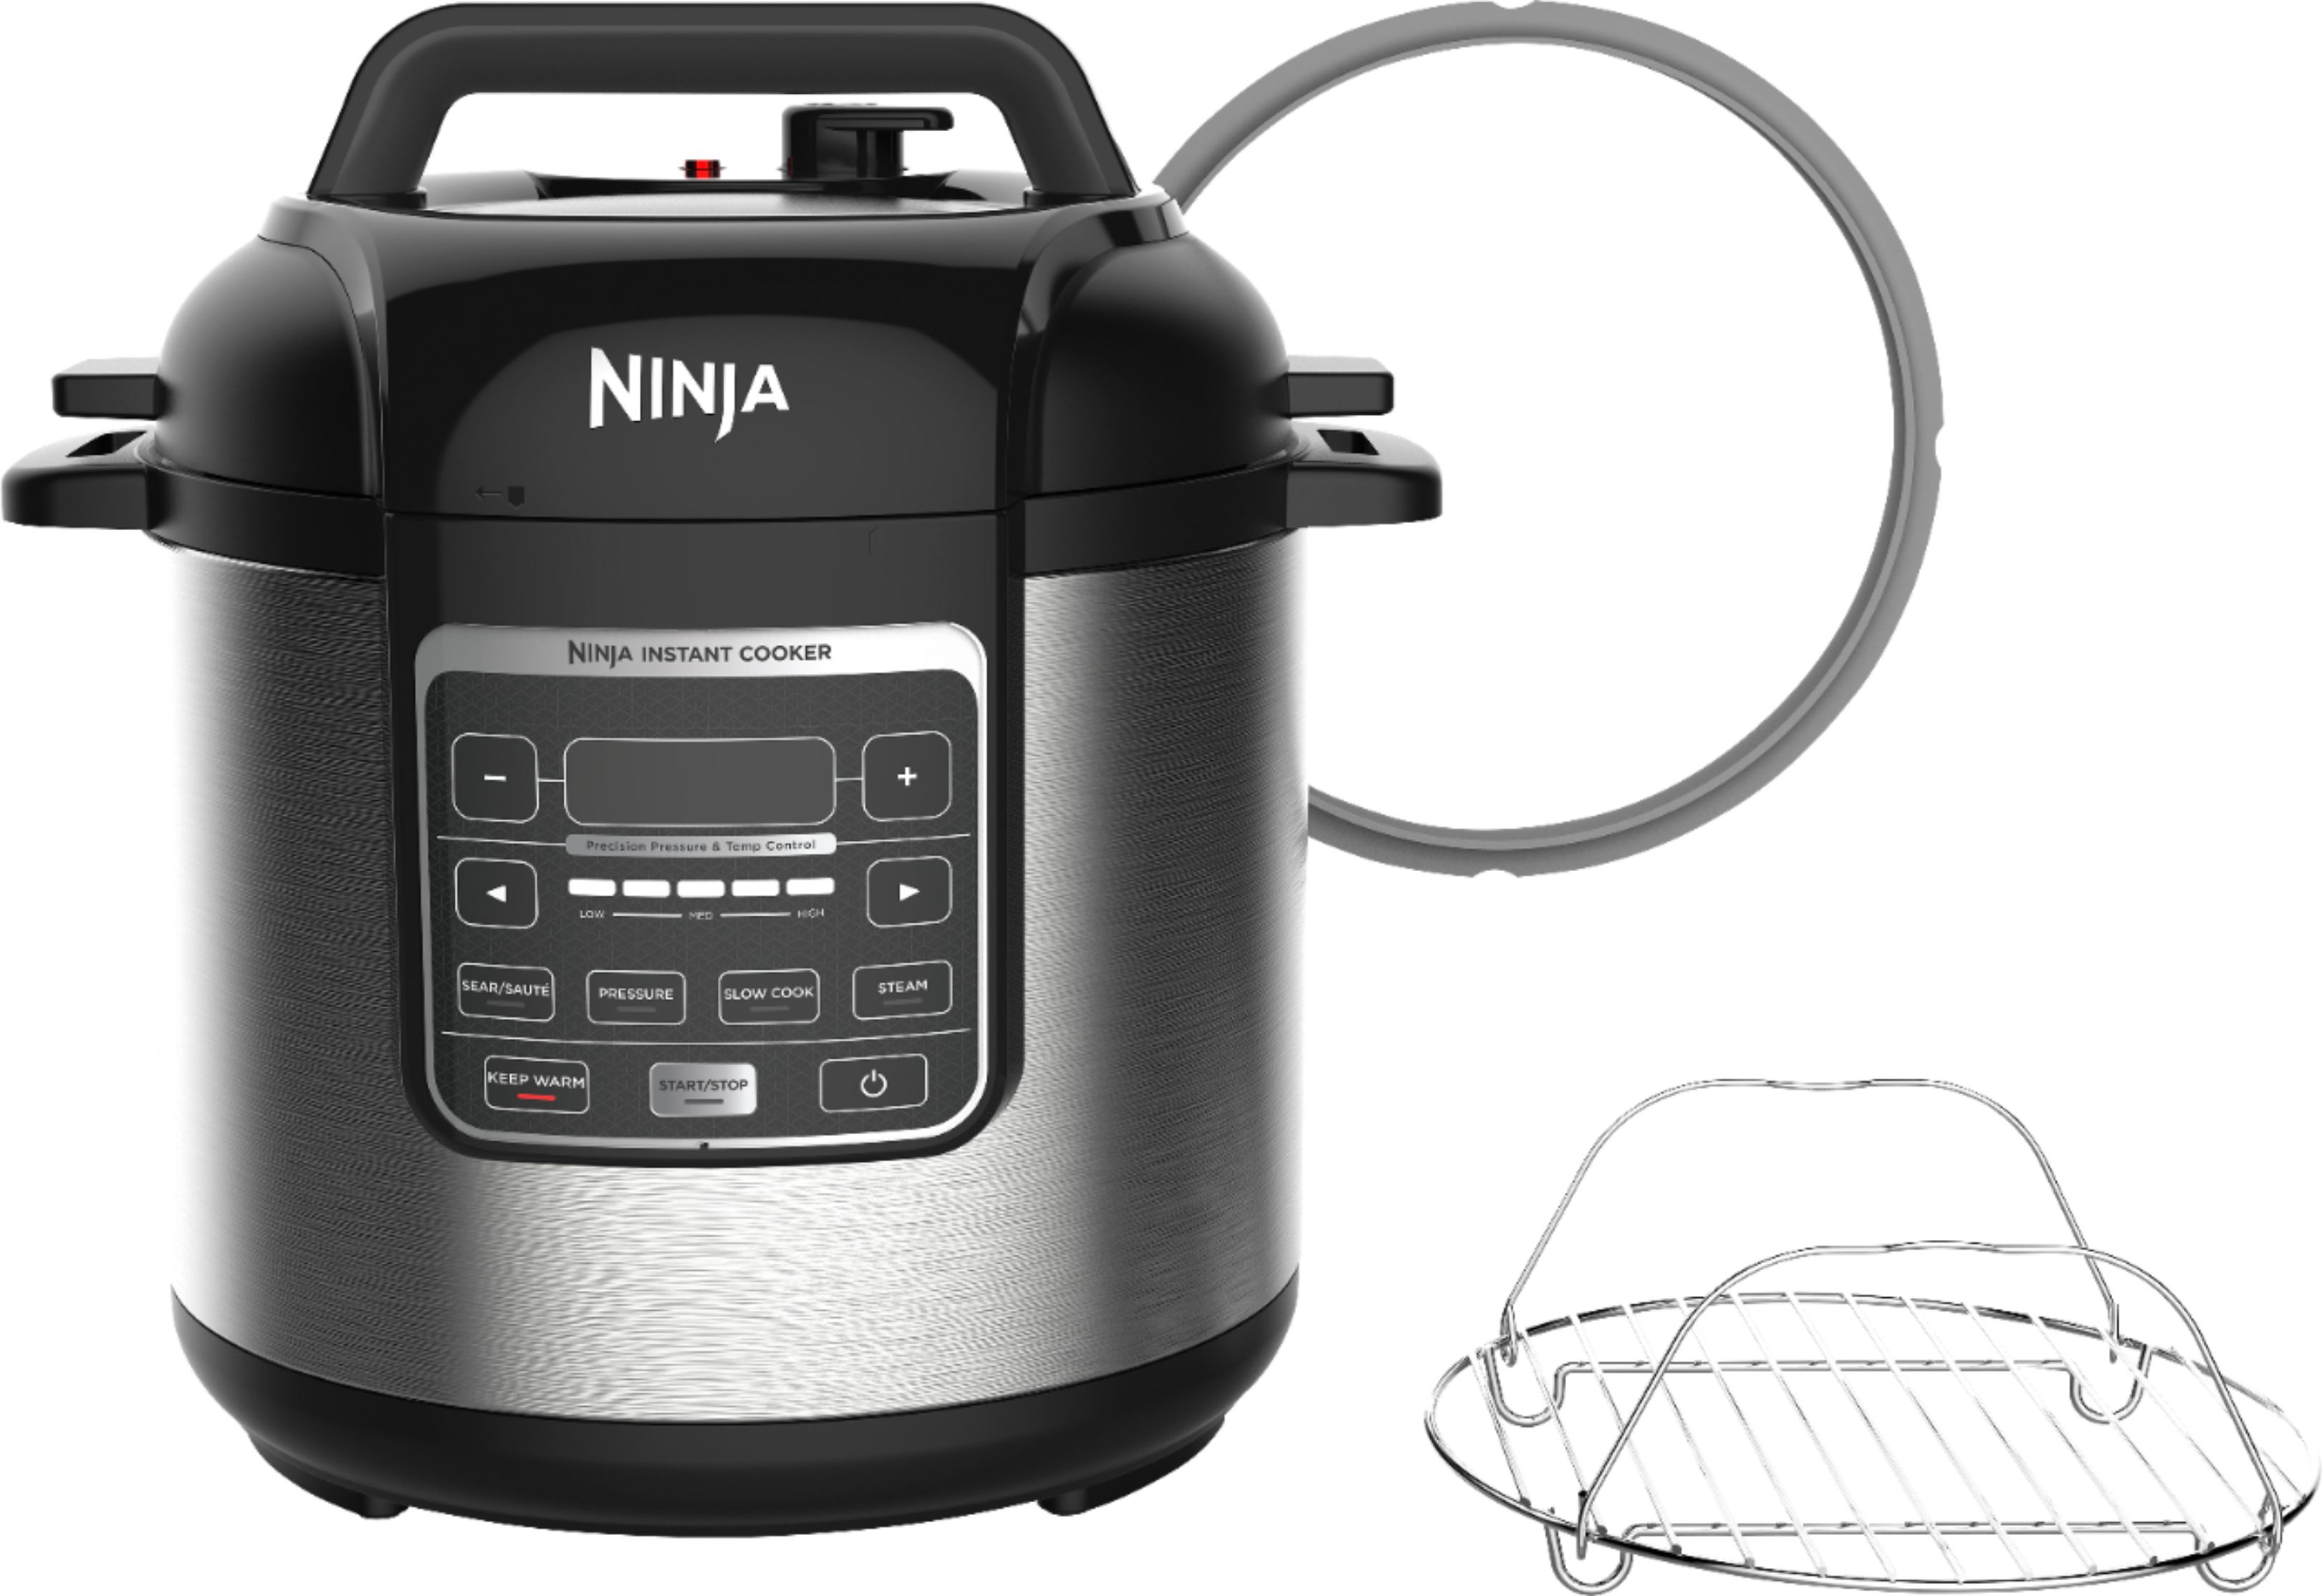 Ninja 6-Quart Black Oval Slow Cooker at